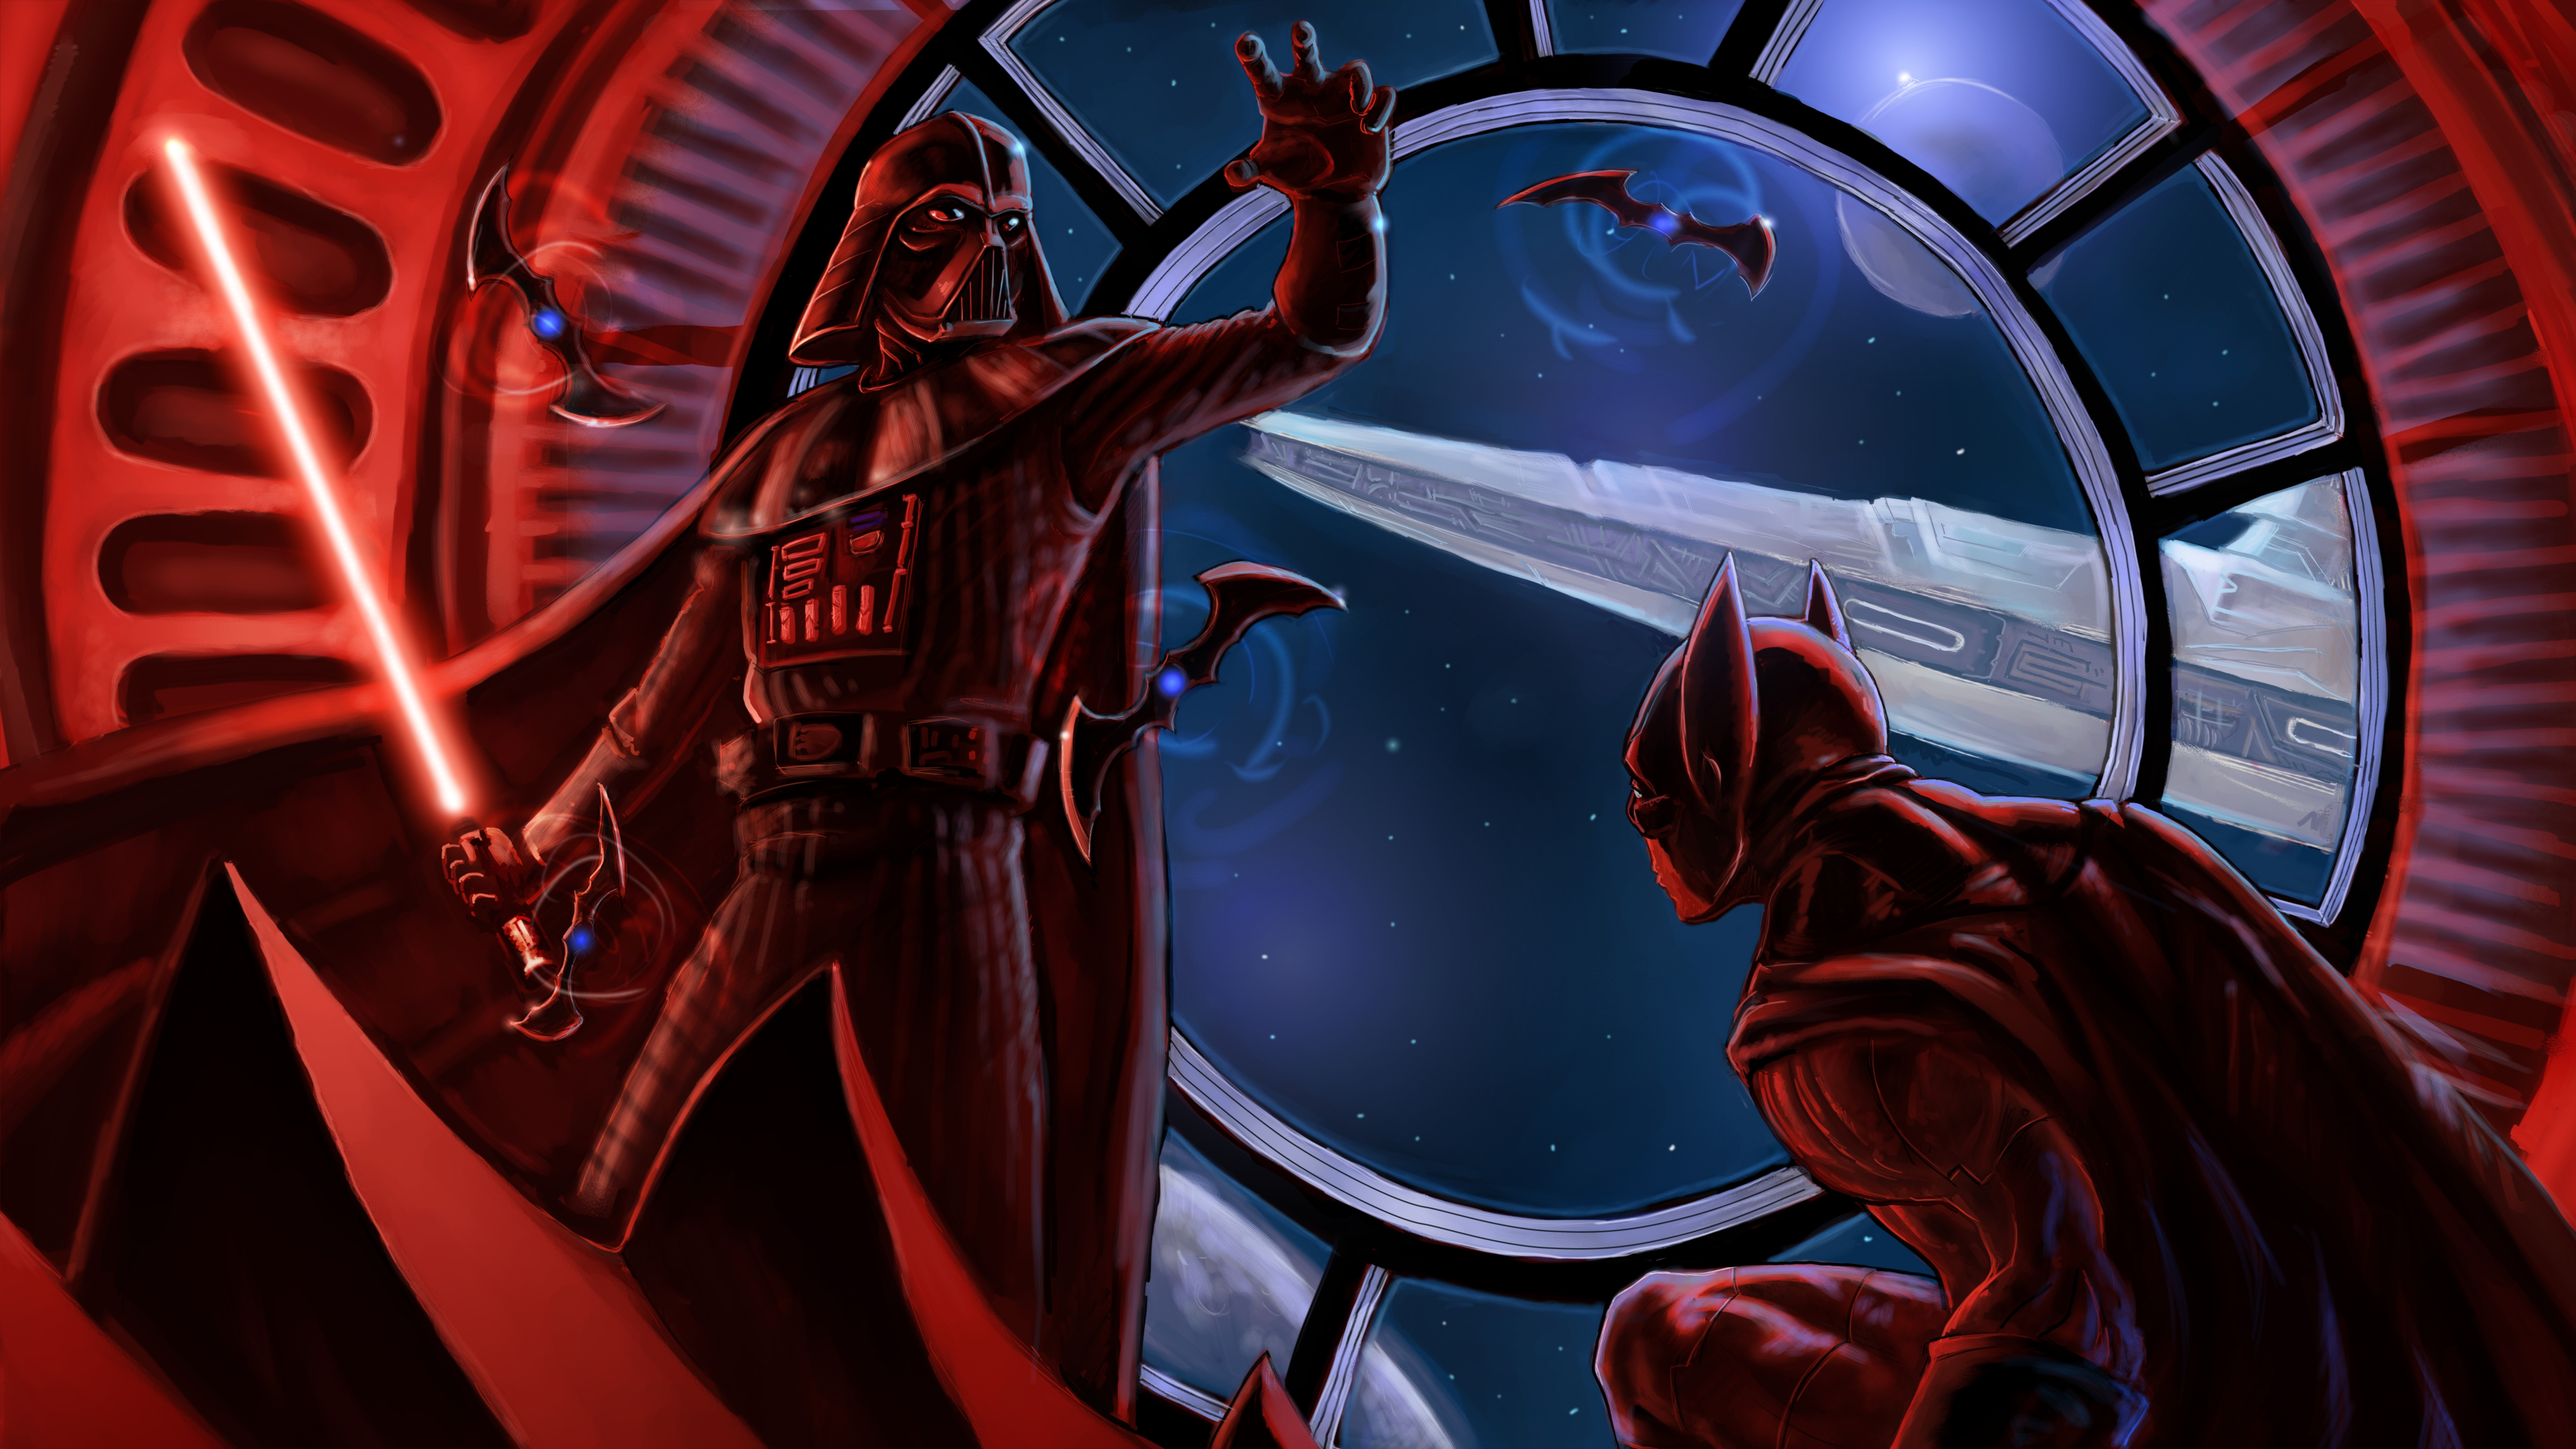 Darth Vader Batman Star Wars DC Comics Lightsaber Artwork Crossover Star Destroyer Sith 5120x2880